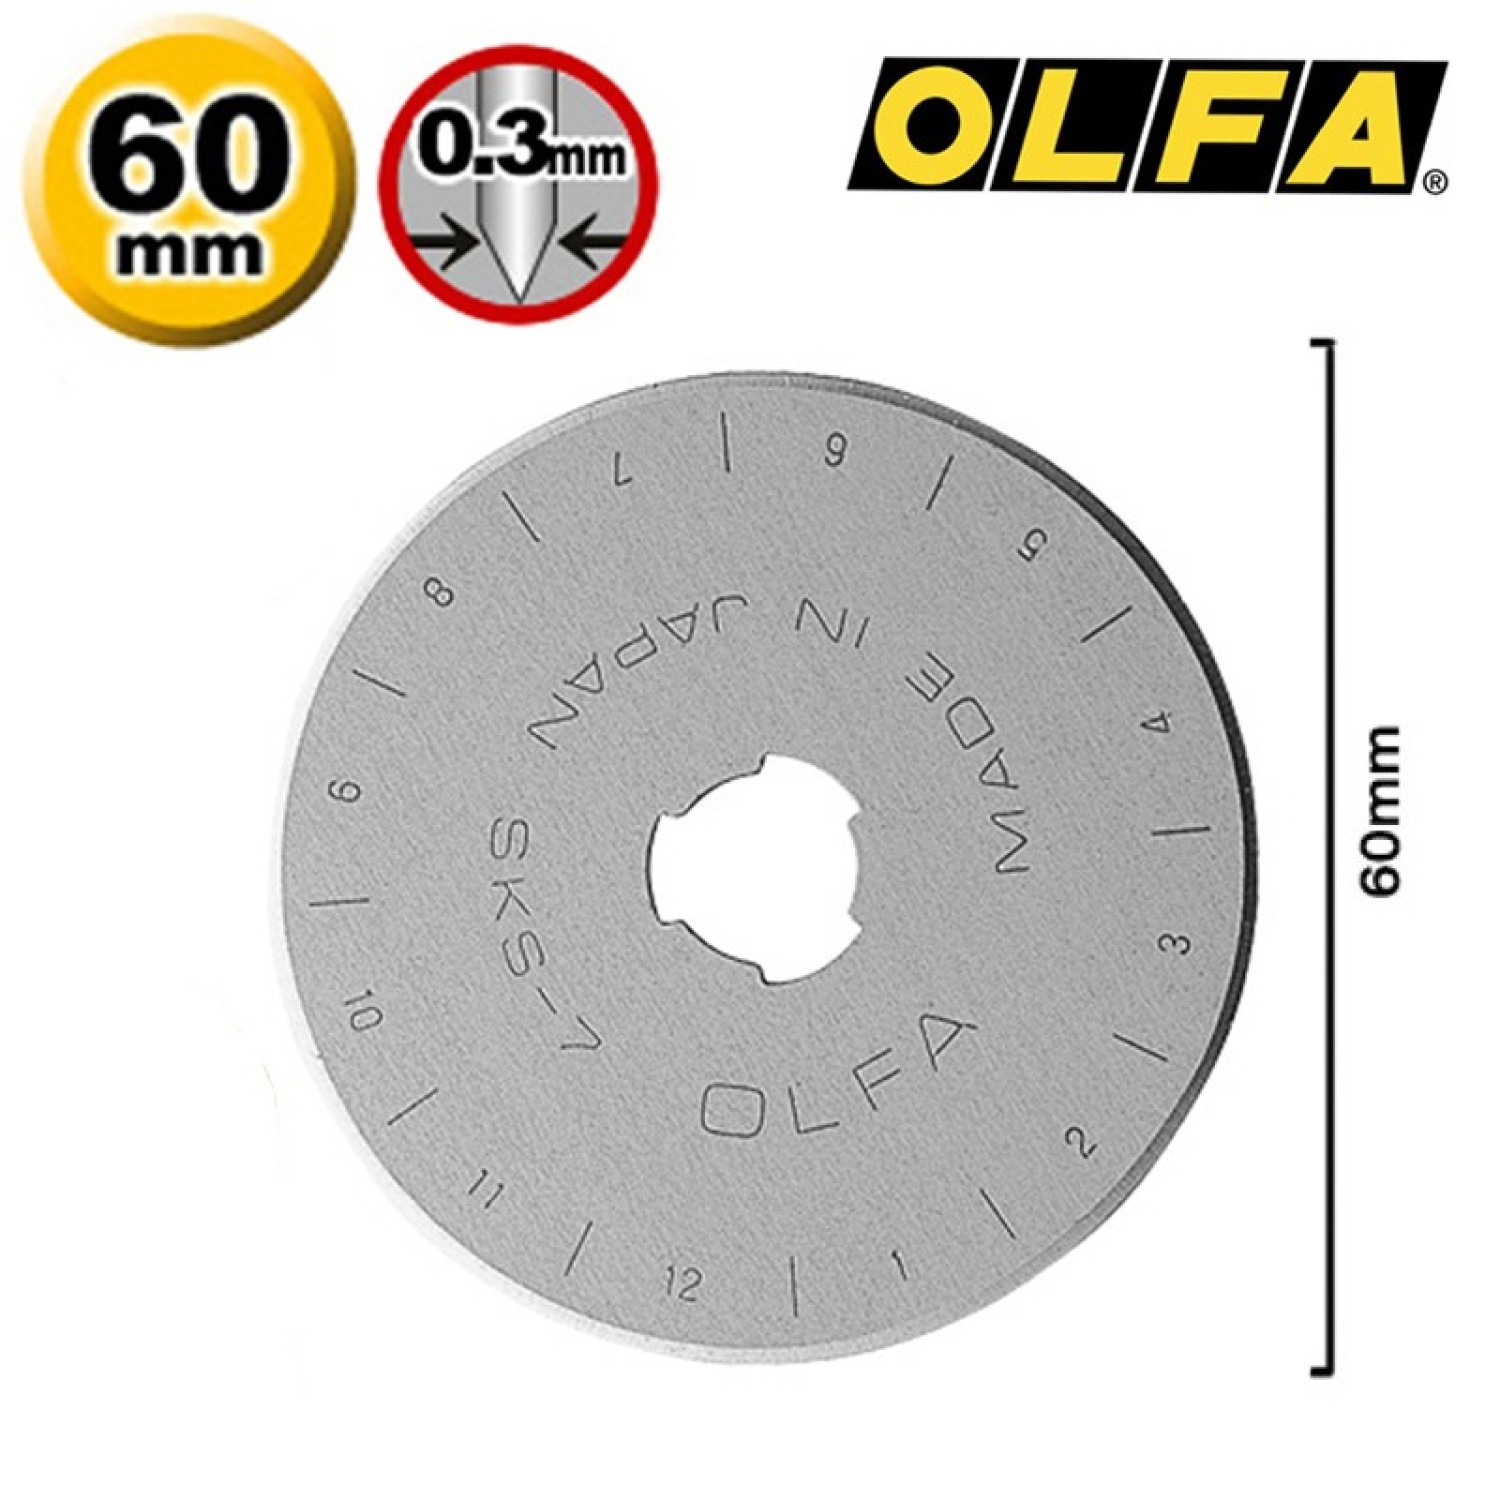 Olfa RB60-1 Rotary Blade Dimensions